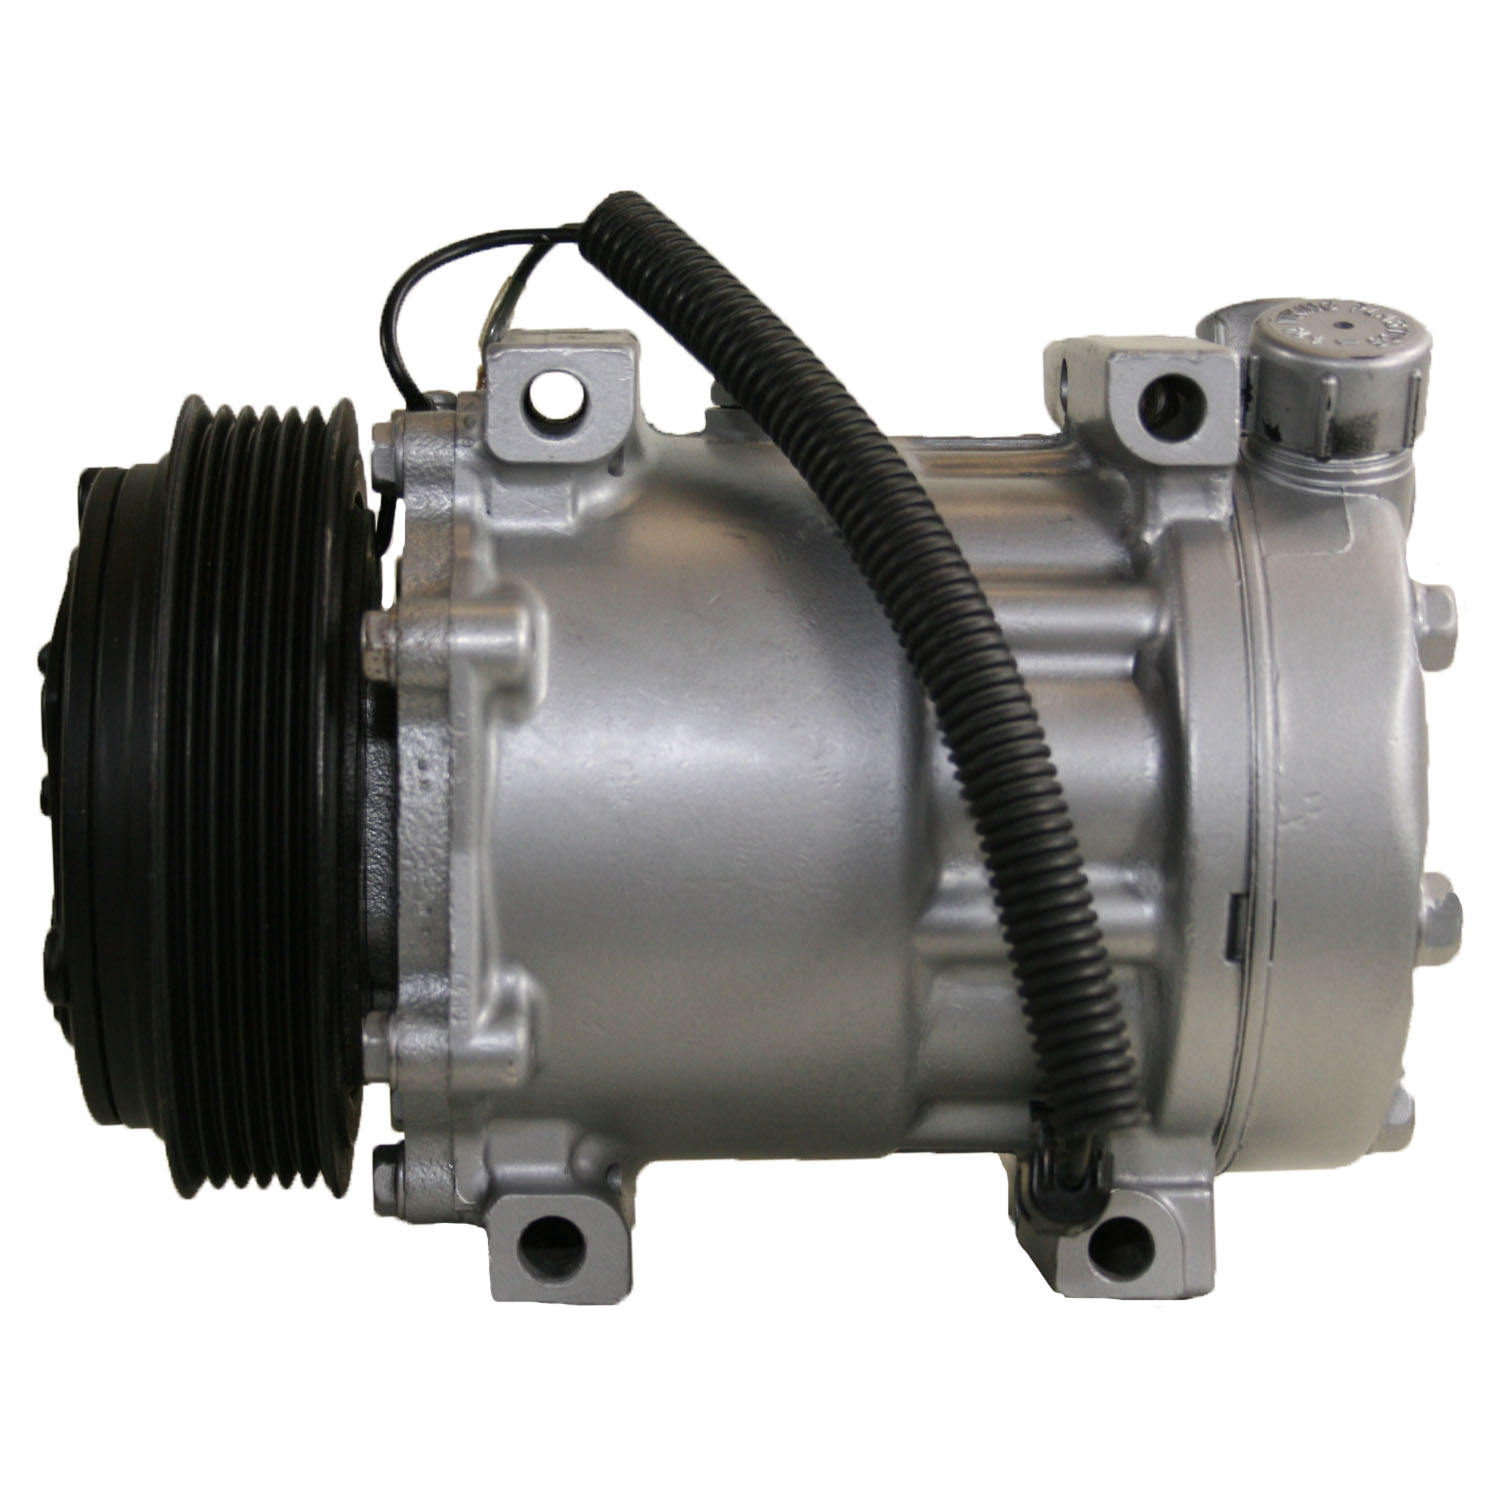 TCW Compressor 40571.601 Remanufactured